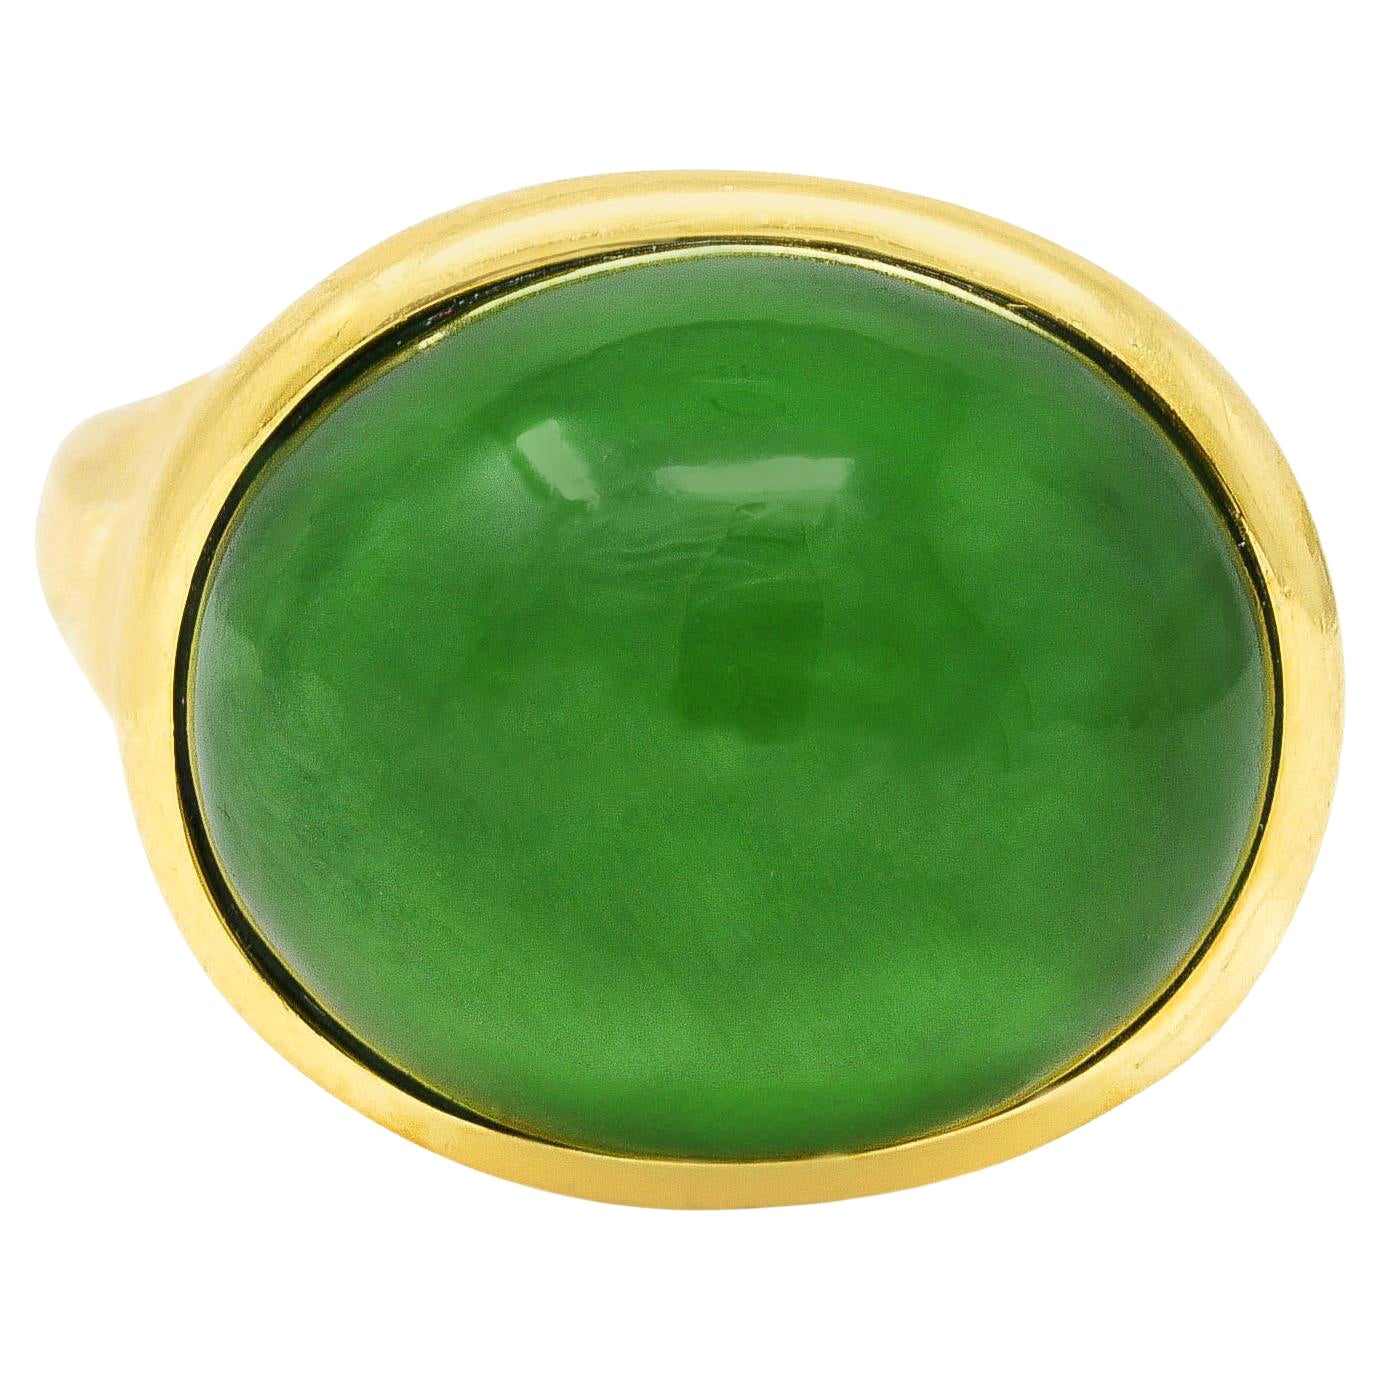 Elsa Peretti pour Tiffany & Co. Bague cabochon en or jaune 18 carats et jade